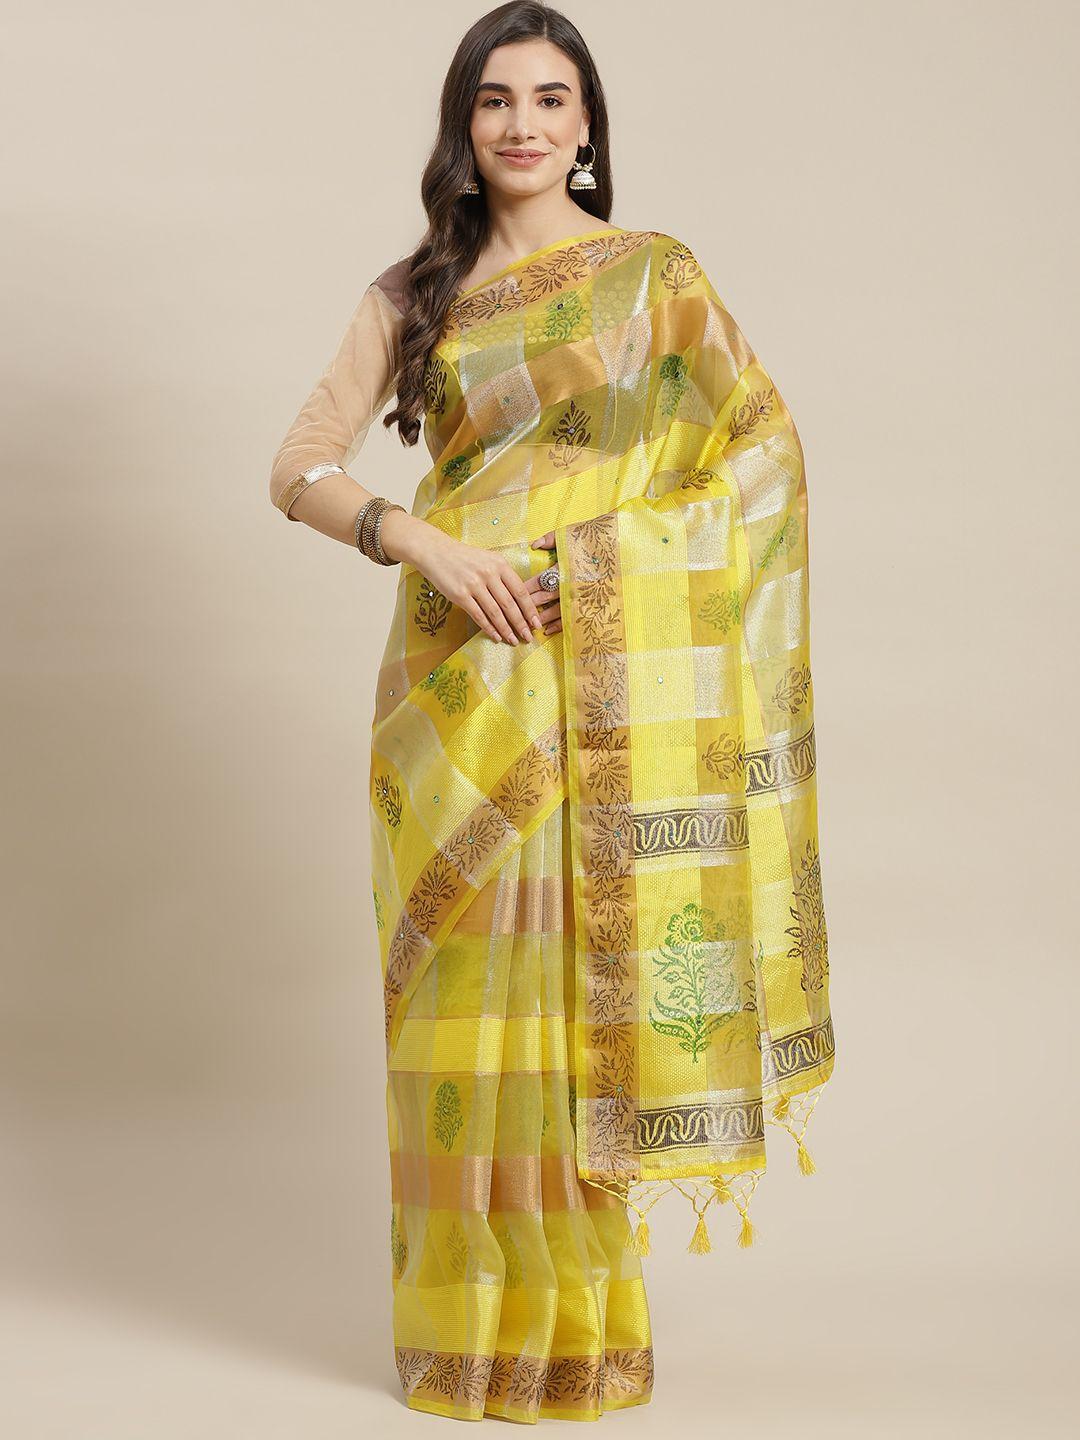 chhabra 555 yellow & gold-toned floral mirror work tissue block print saree